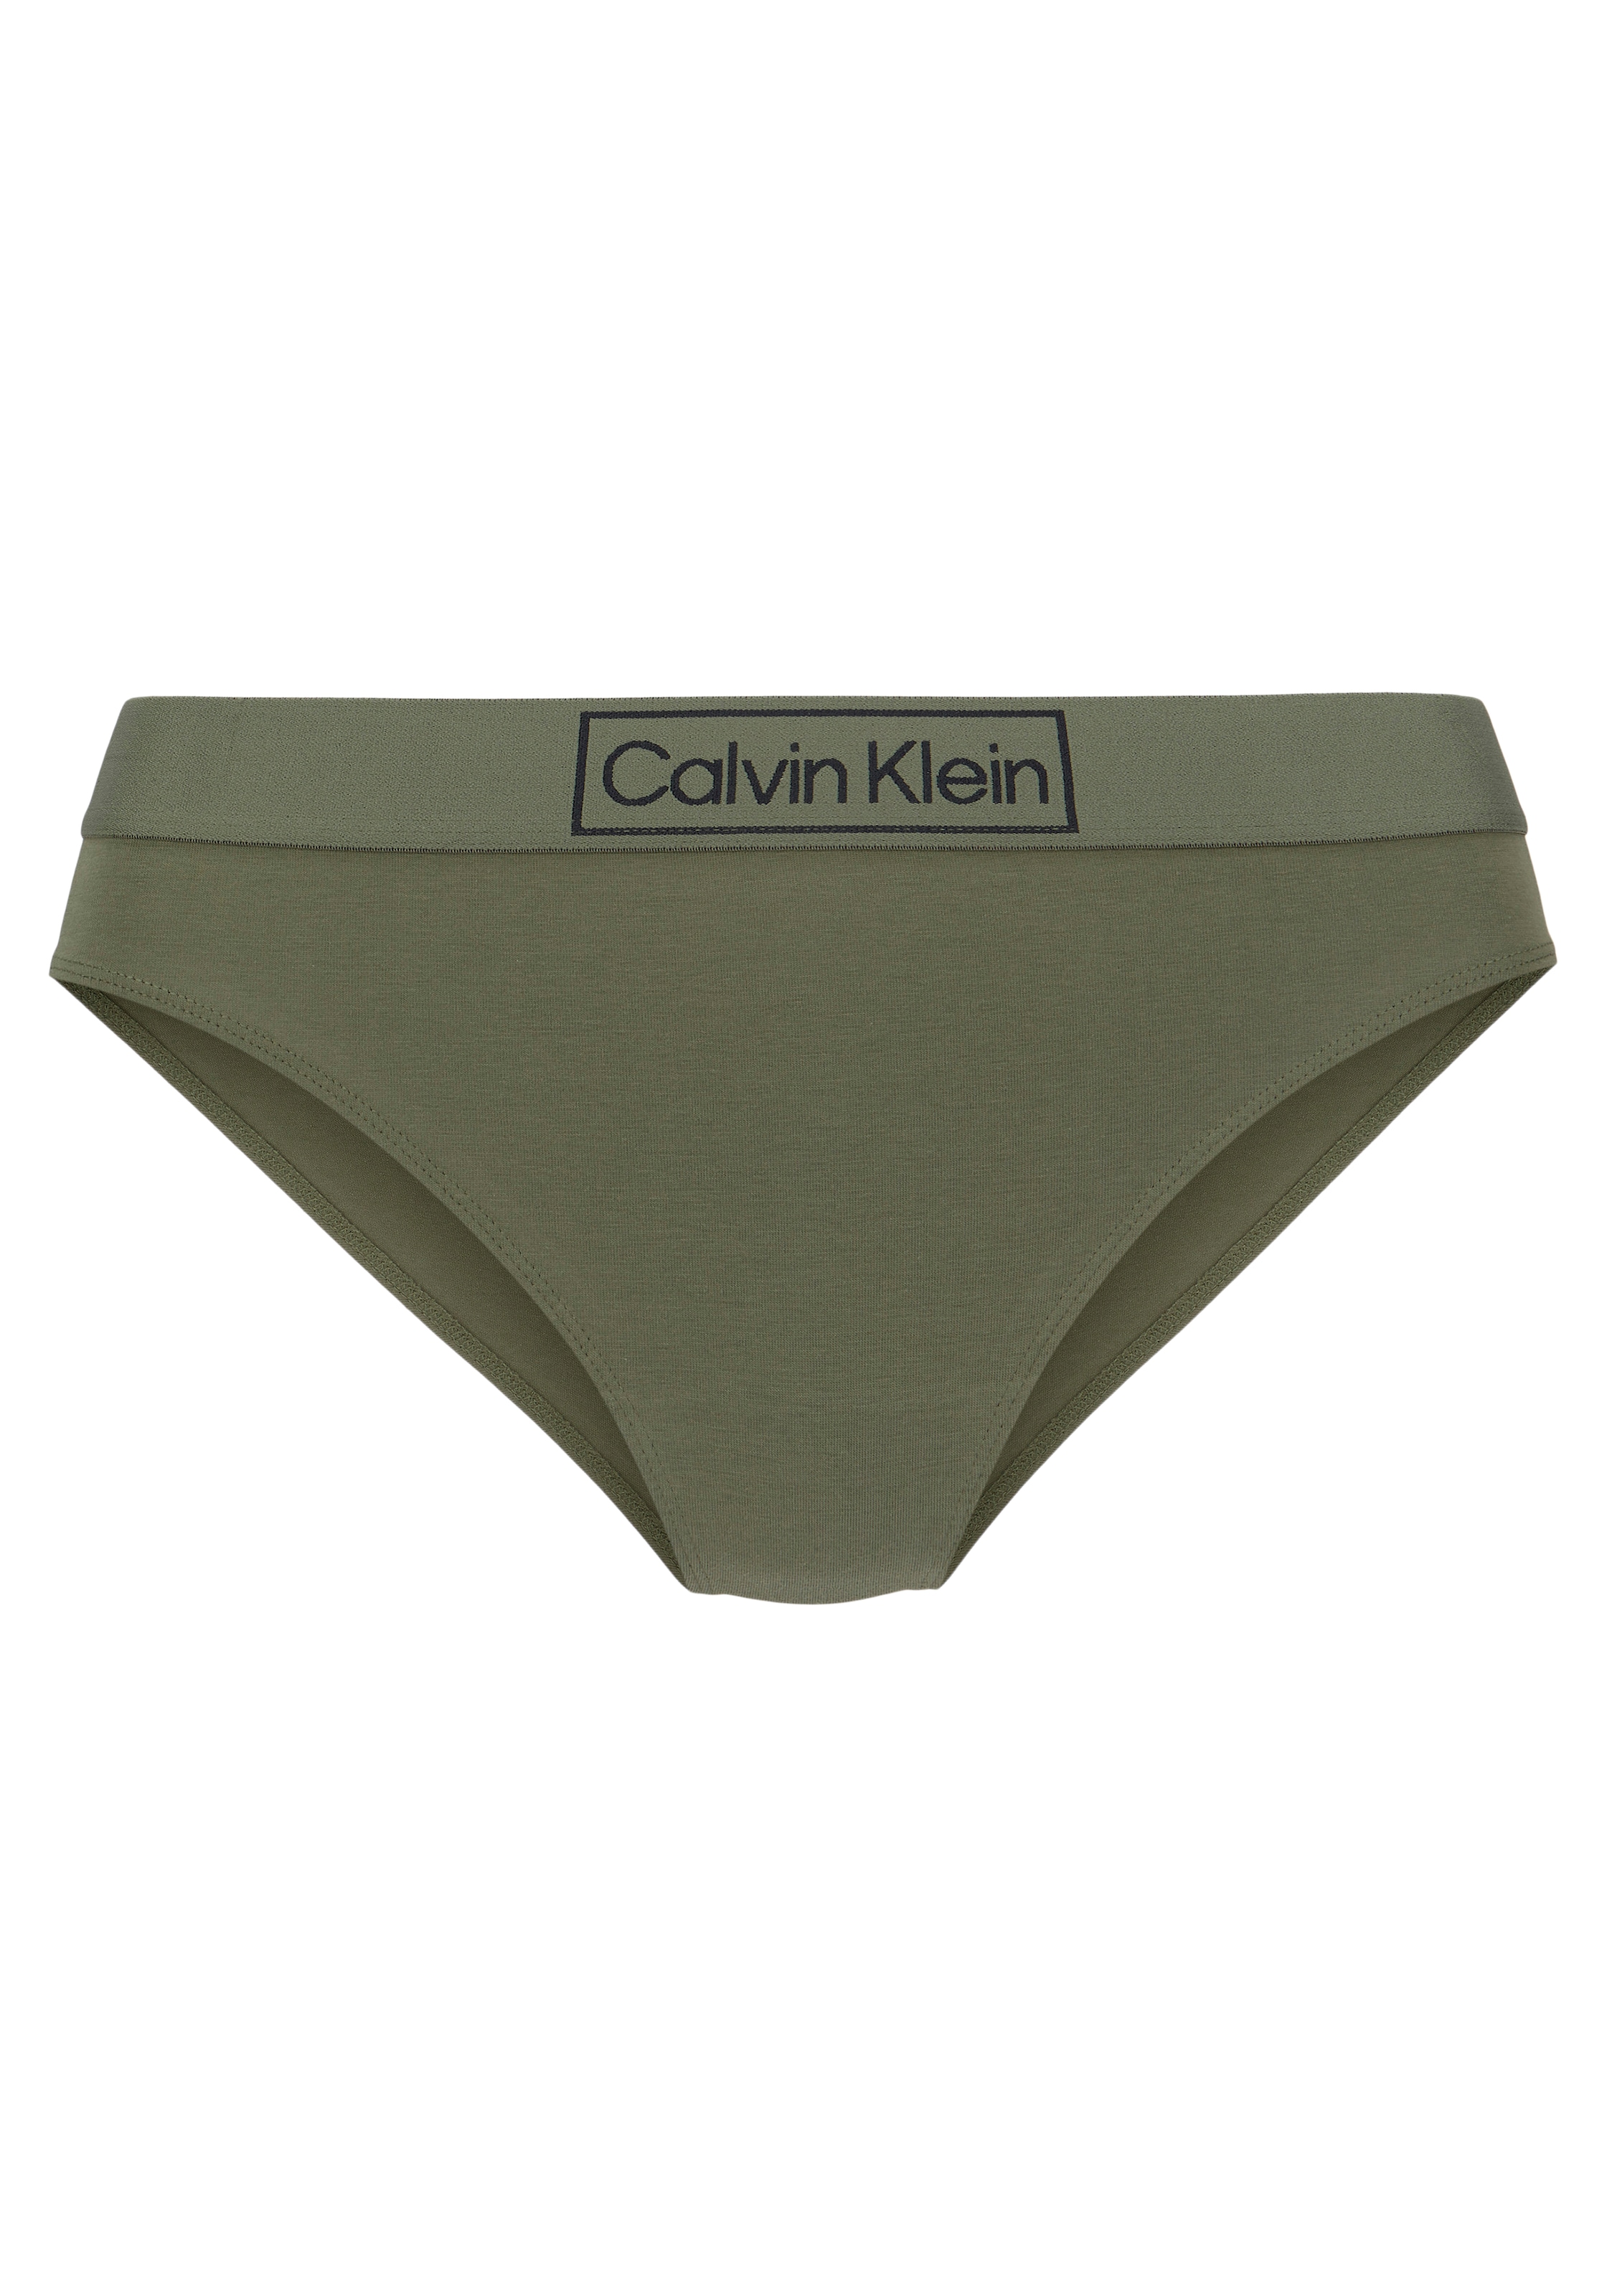 (FF)«, Logo-Schriftzug »BIKINI Calvin bei Klein ♕ Calvin mit Bikinislip Klein